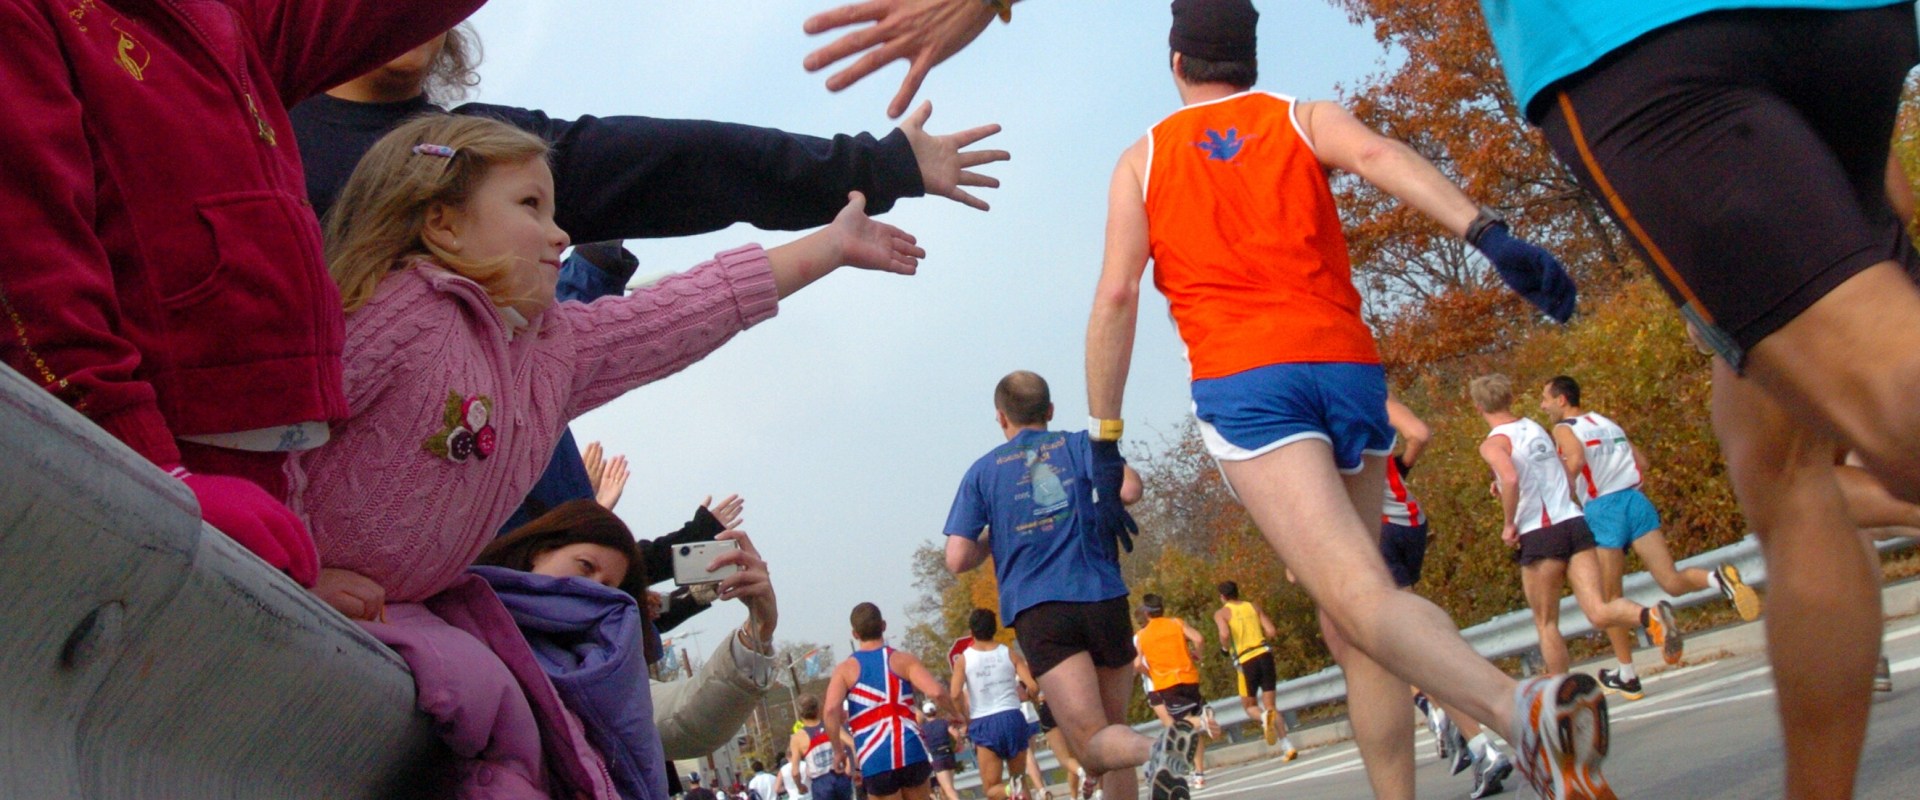 Tracking Your Progress: The Hattiesburg, MS Marathon